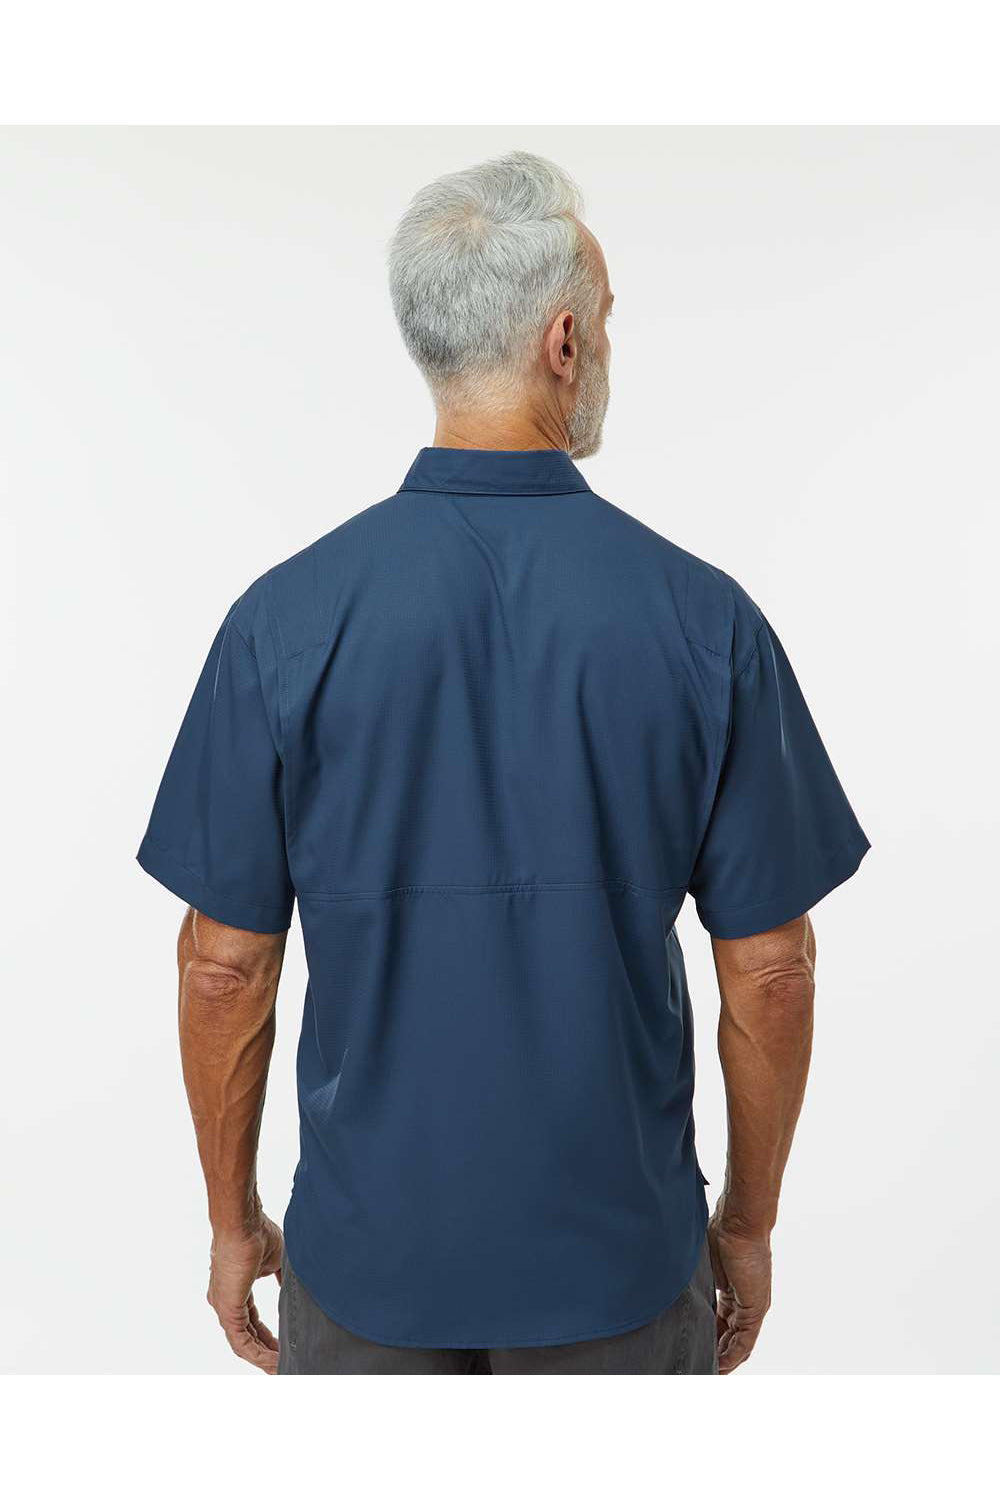 Paragon 700 Mens Hatteras Performance Short Sleeve Button Down Shirt Navy Blue Model Back